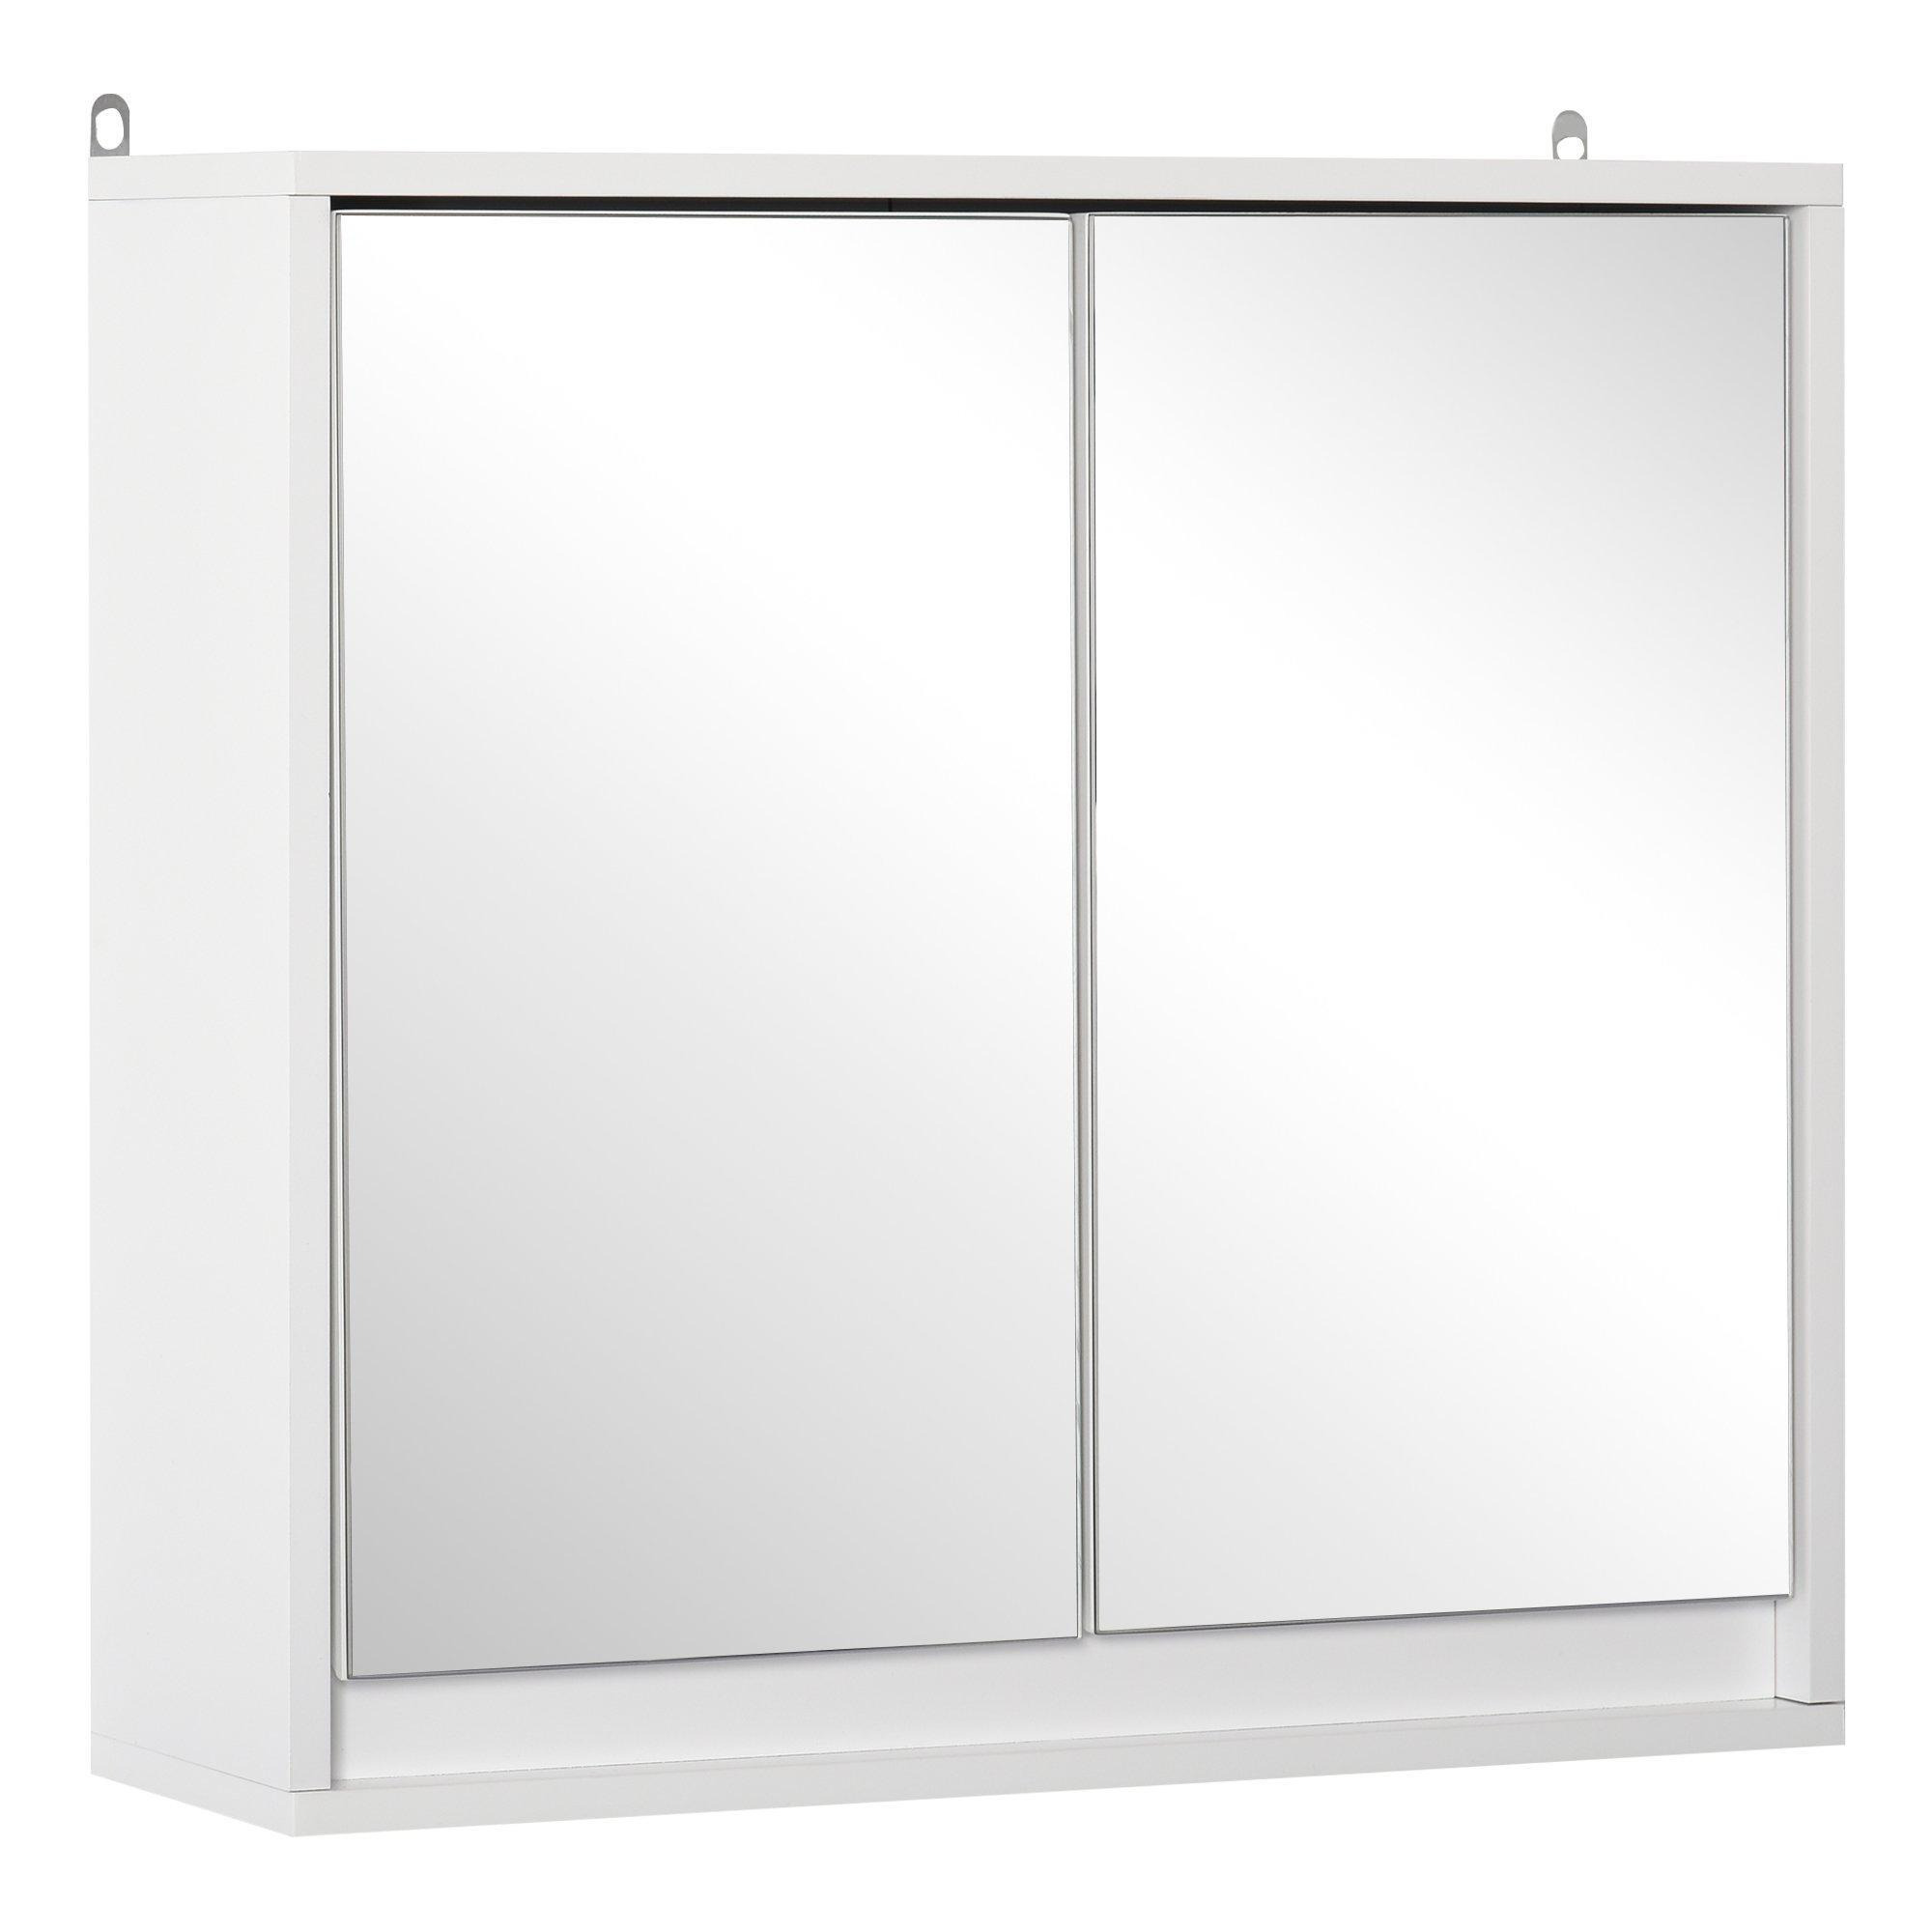 Wall Mounted Mirror Cabinet with Storage Shelf Bathroom Cupboard - image 1